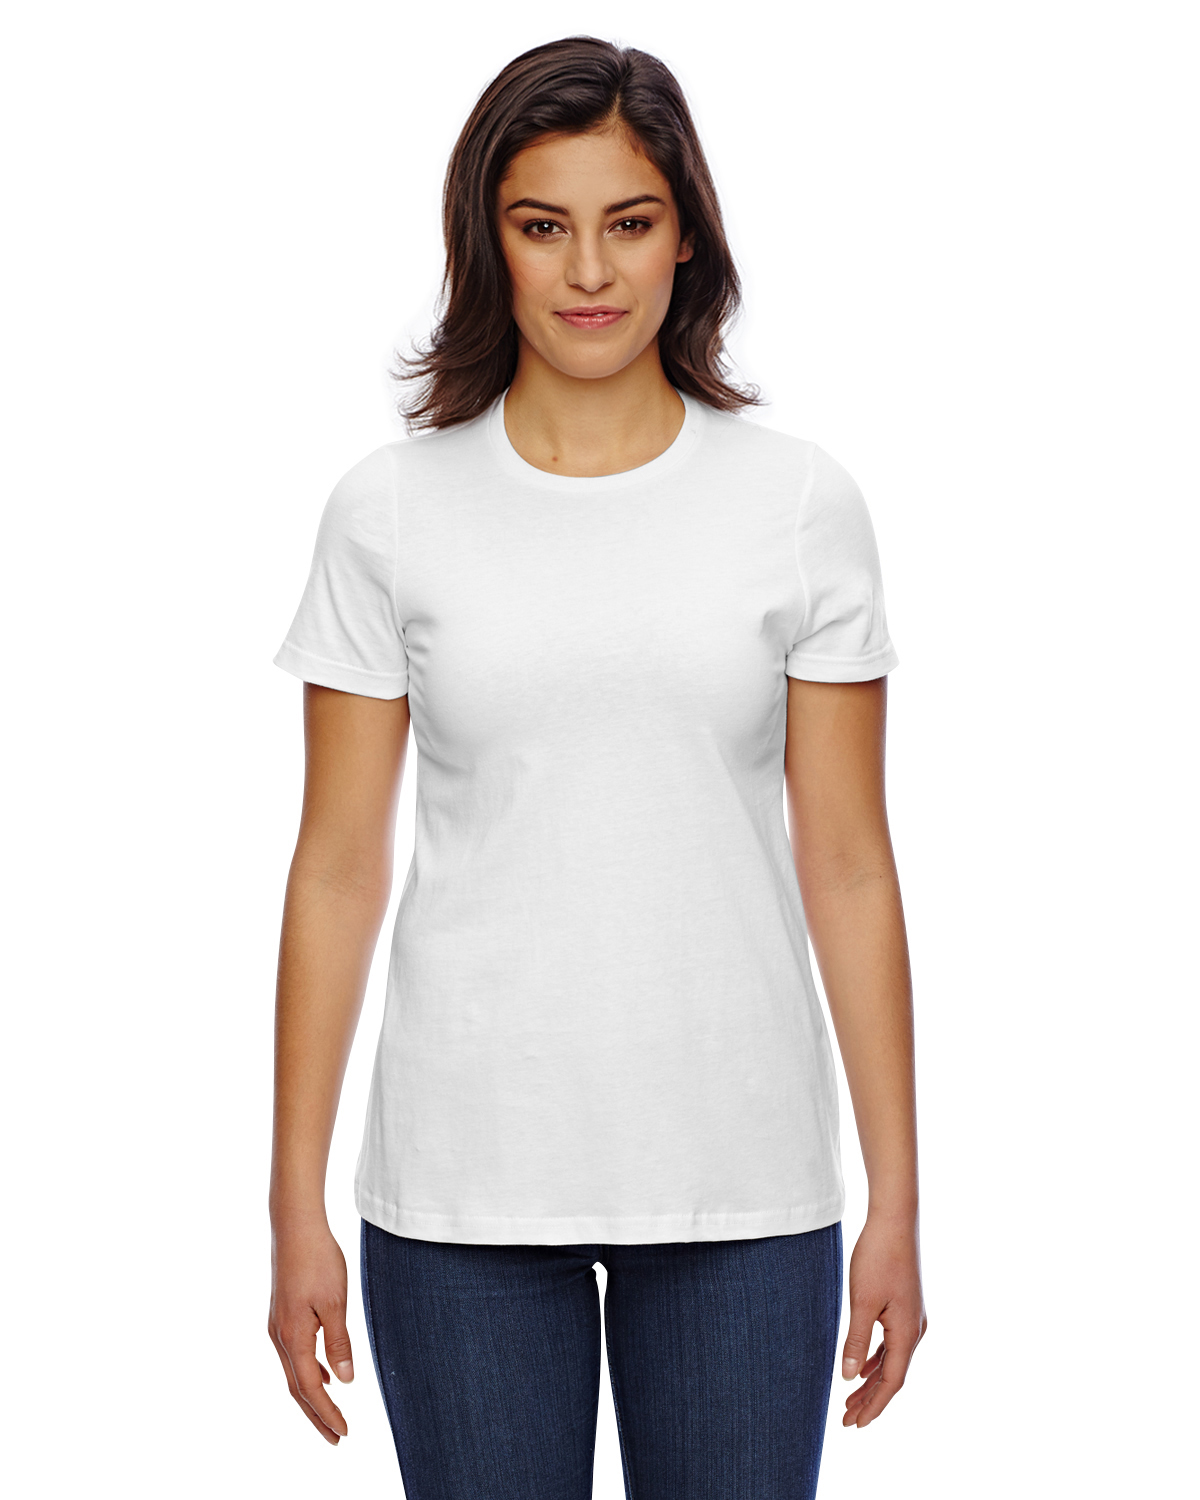 American Apparel 23215 - Ladies' Classic Women s T-Shirt - Friendly ...